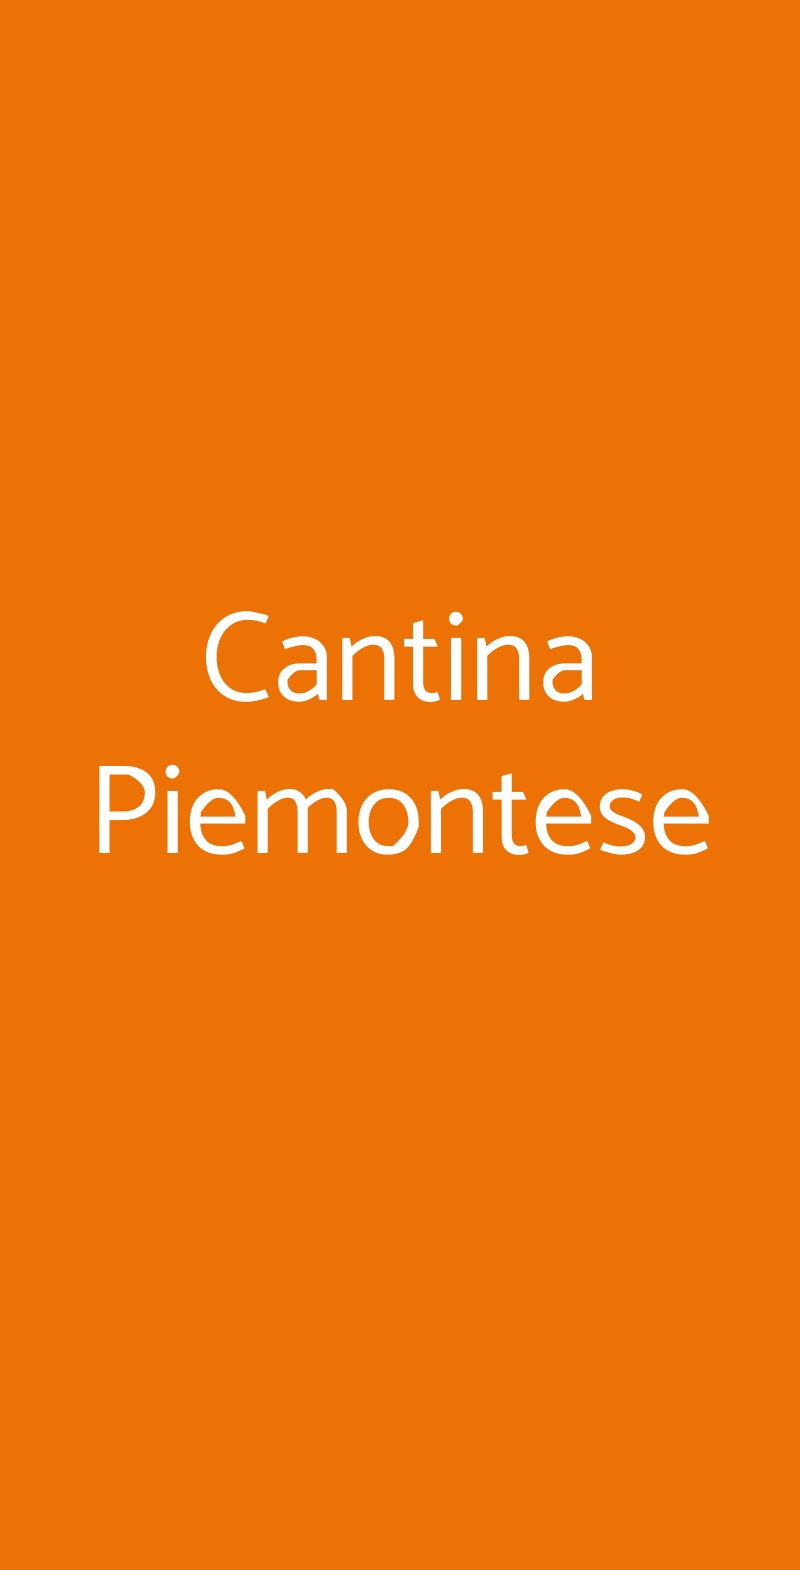 Cantina Piemontese Milano menù 1 pagina